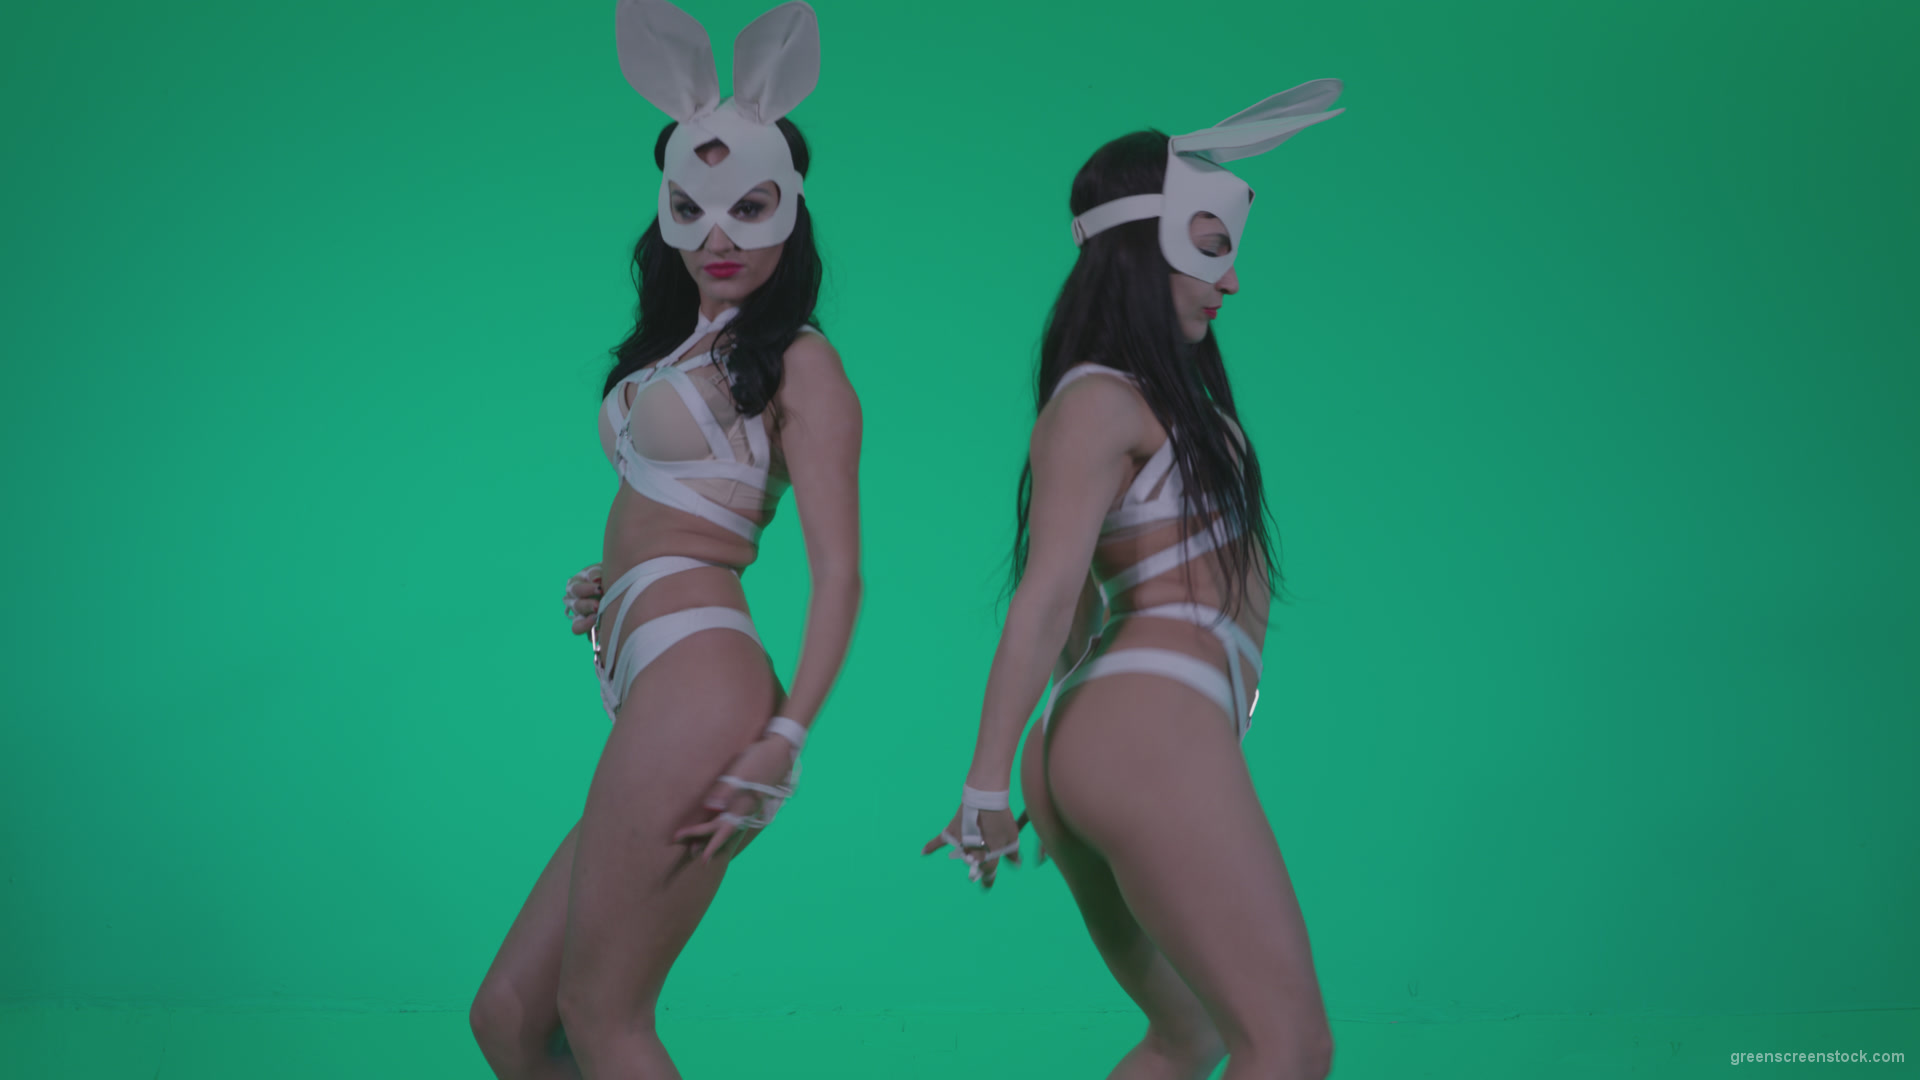 Go-go-Dancer-White-Rabbit-m6-Green-Screen-Video-Footage_007 Green Screen Stock